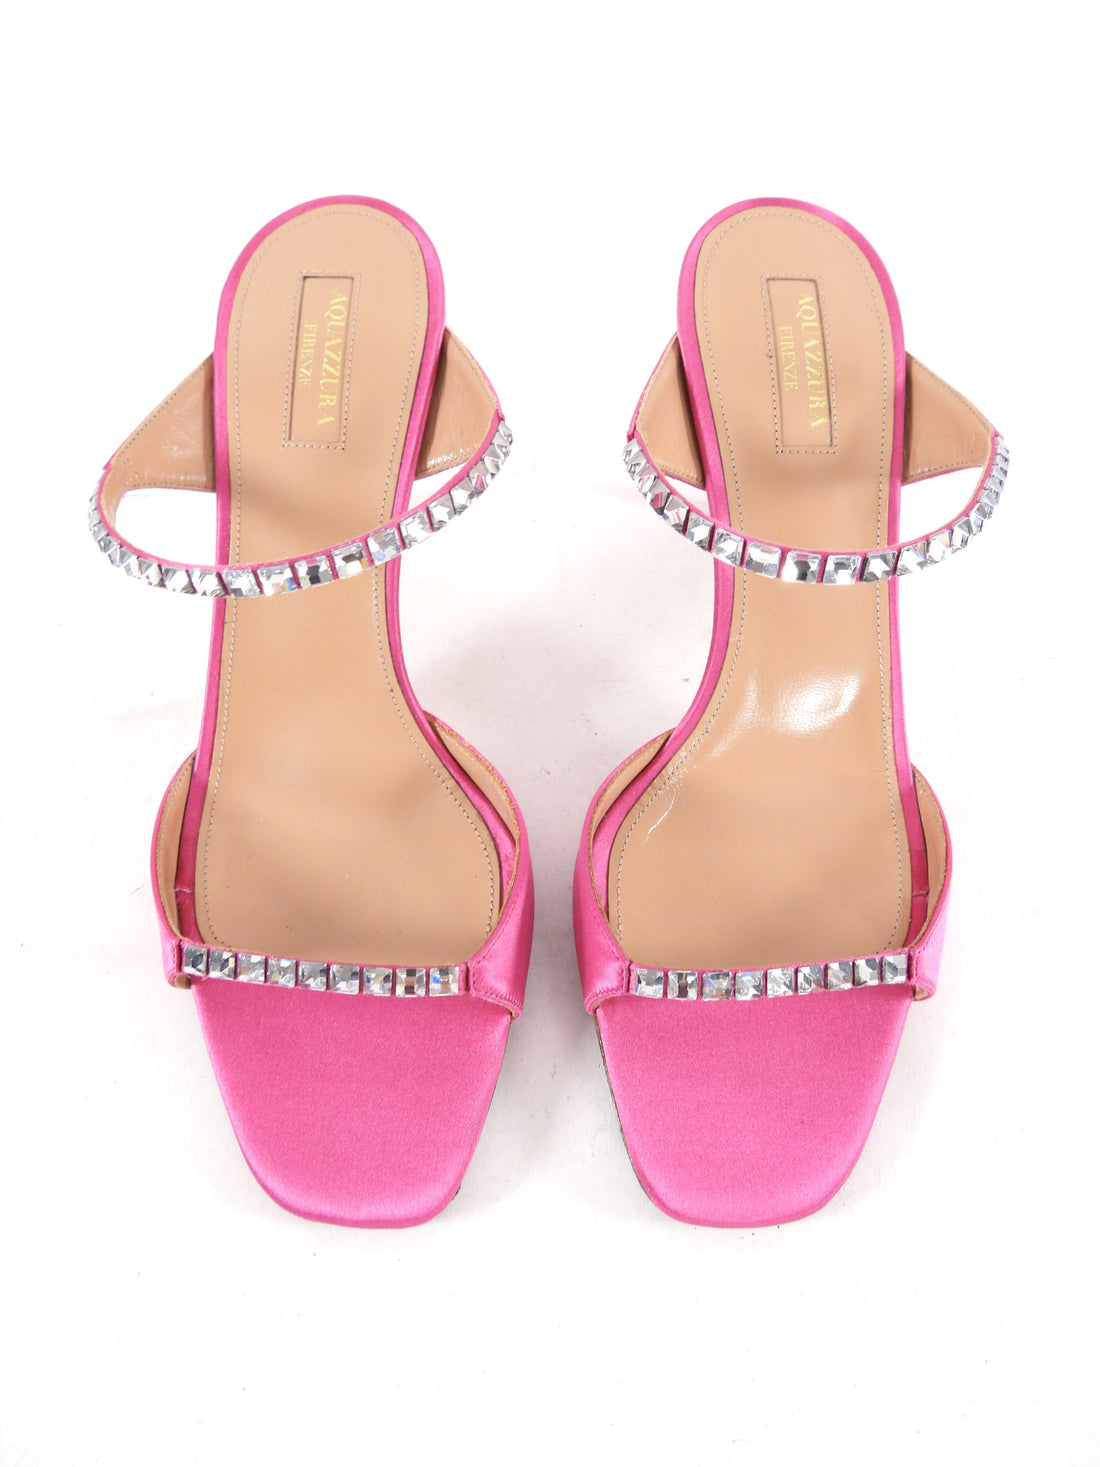 Aquazzura Pink Satin Crystal Jewelled 80mm Heels - 40 (US 9.5)